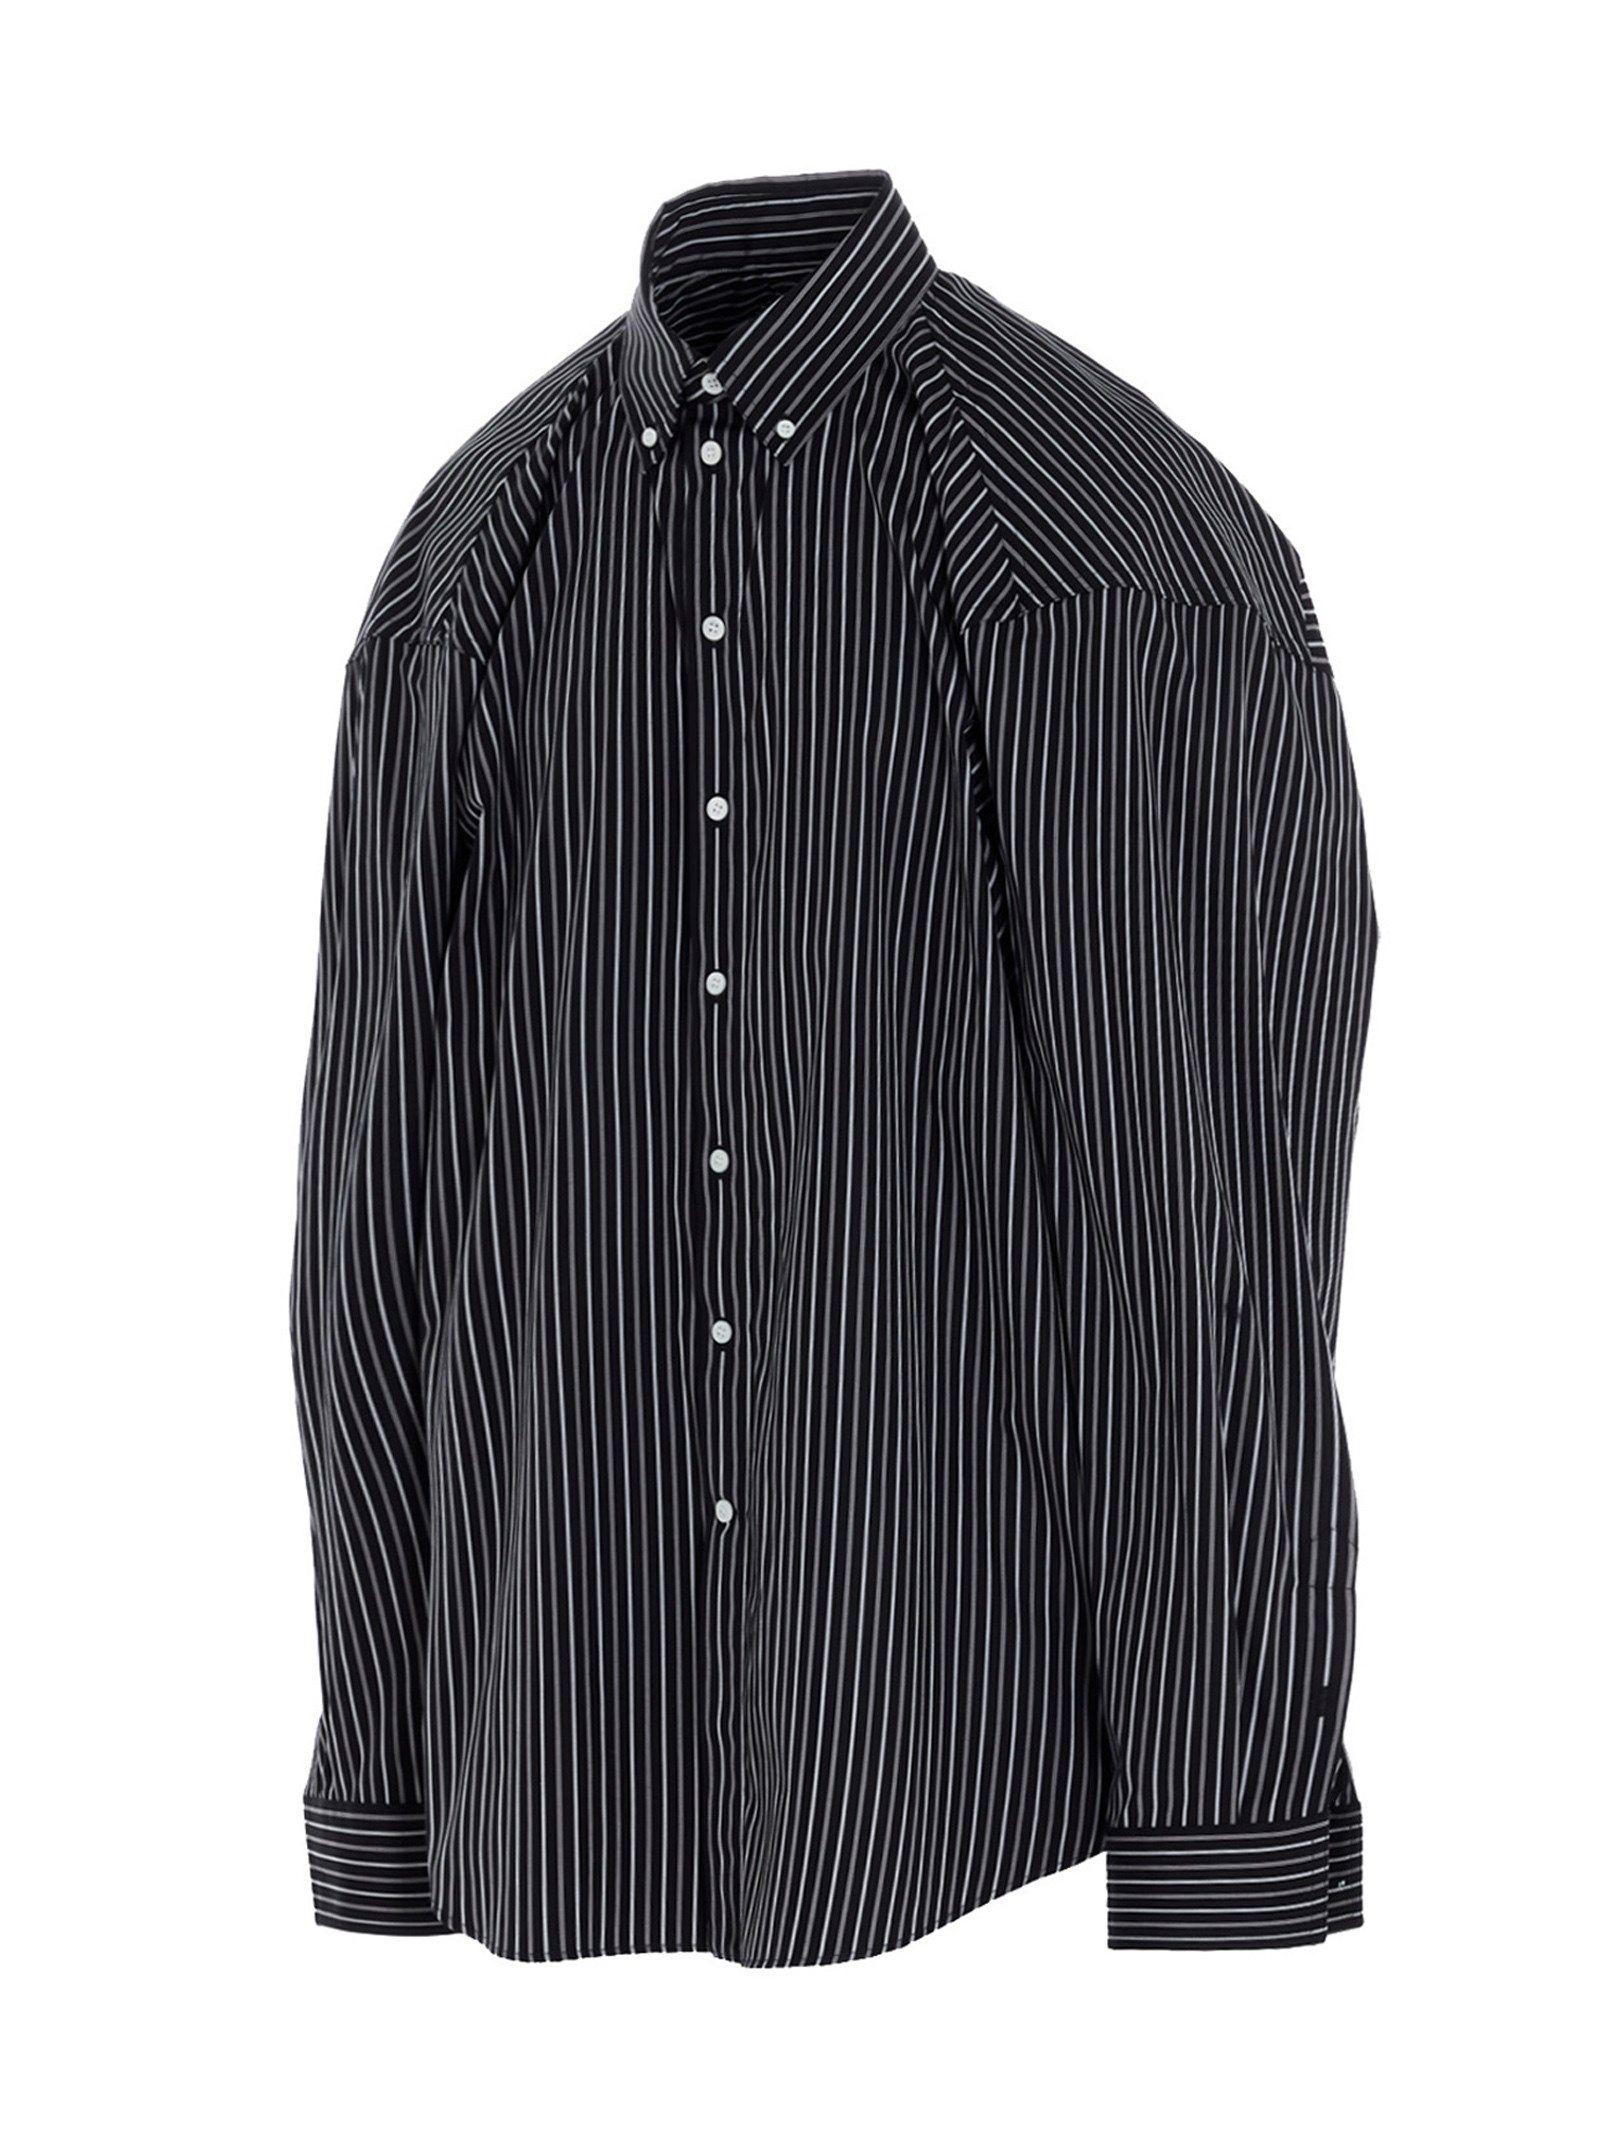 Balenciaga Cotton Shirt in Black for Men - Lyst